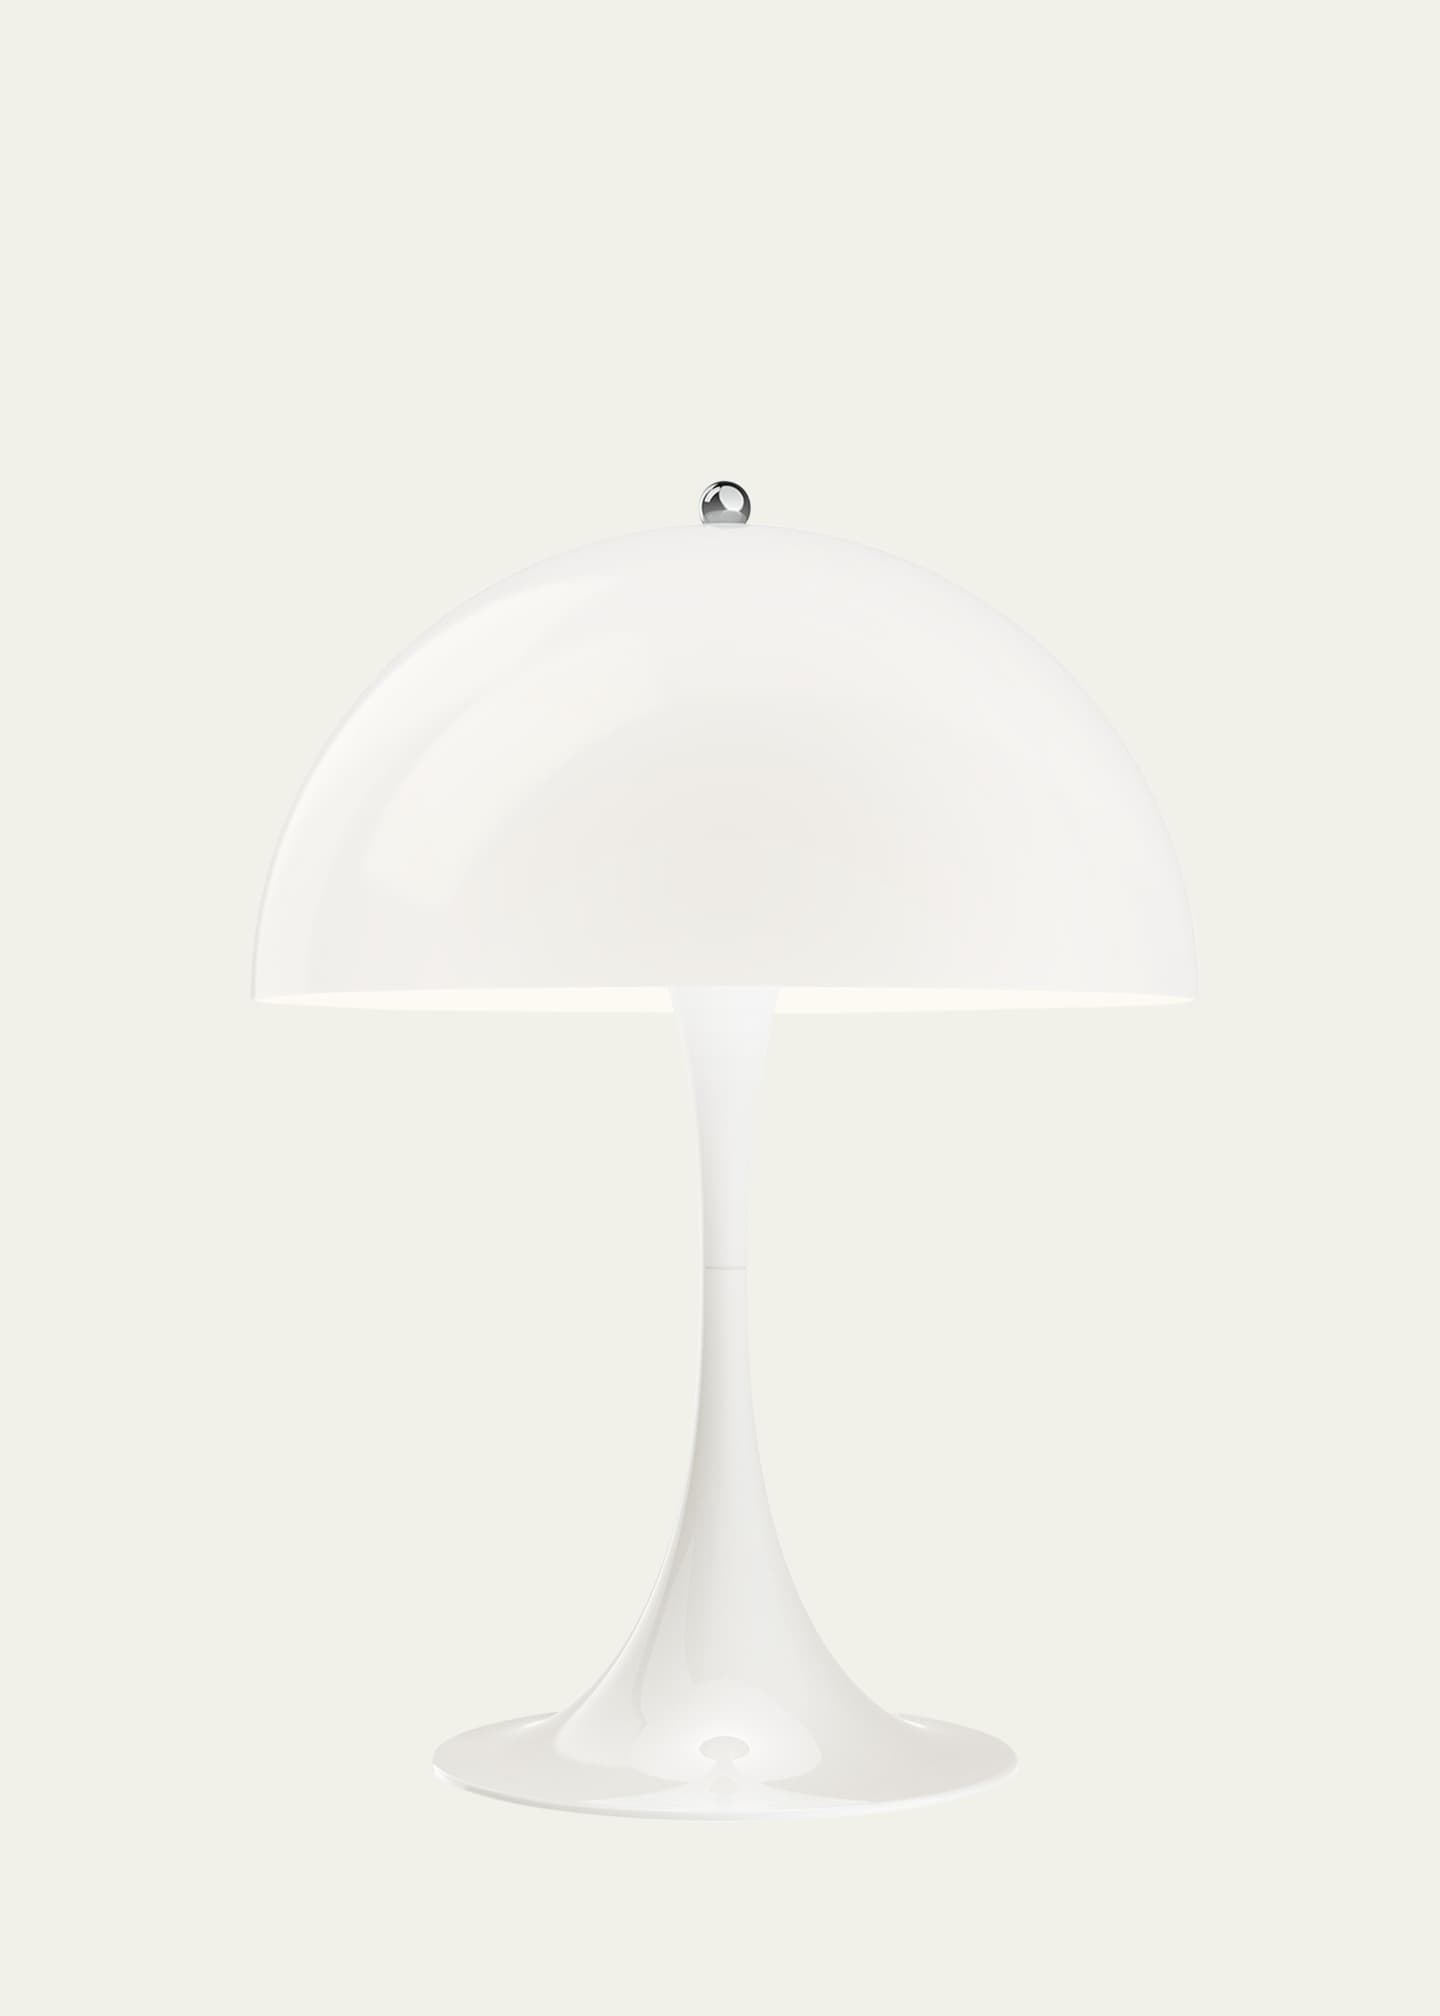 Louis Poulsen - Panthella Table lamp 320